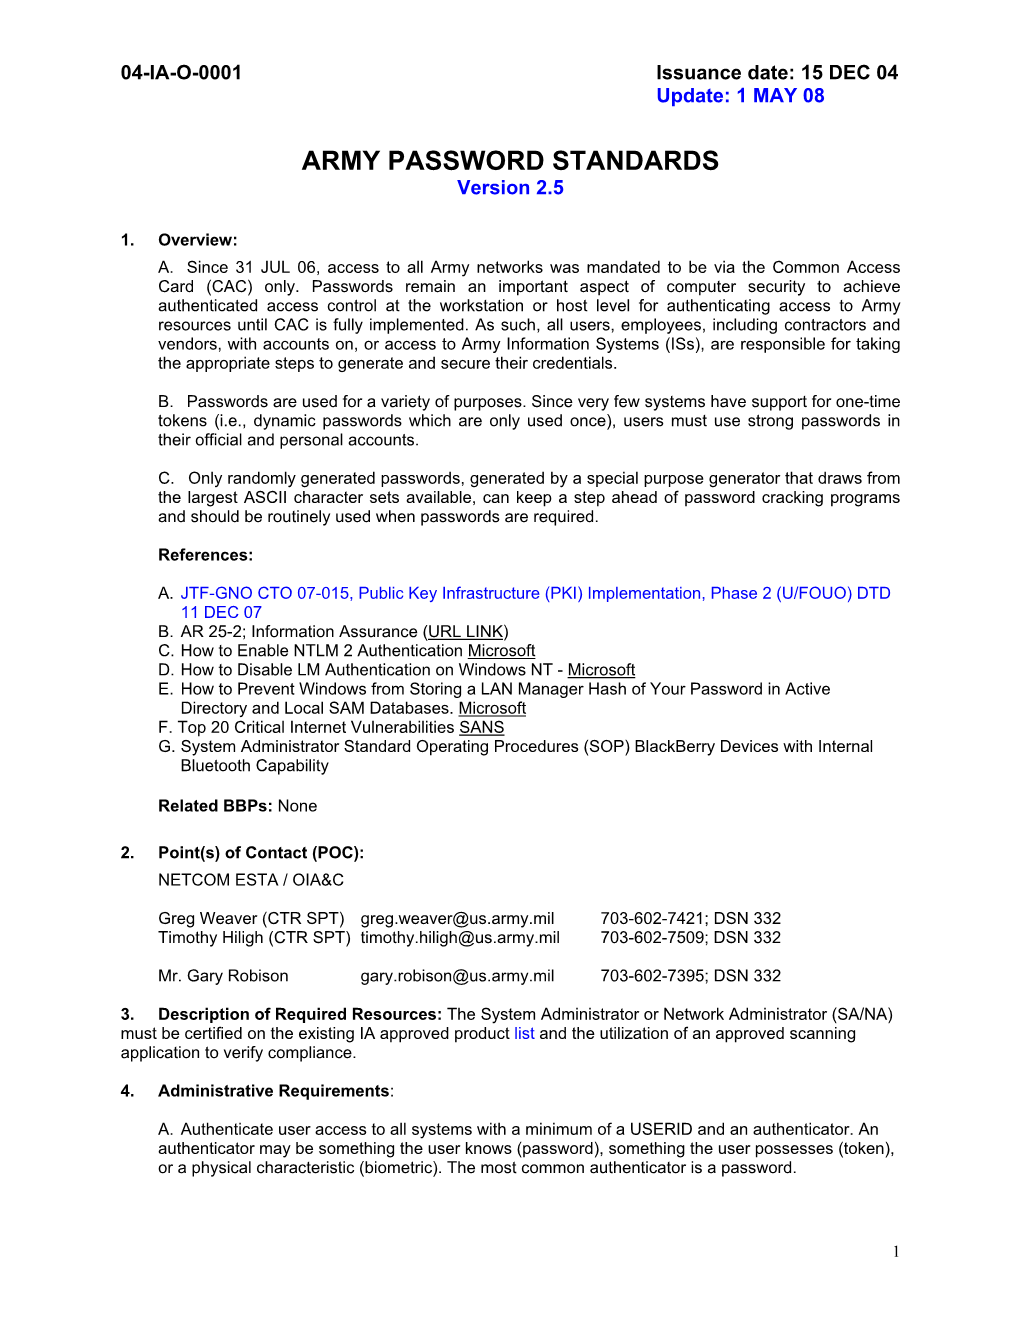 ARMY PASSWORD STANDARDS Version 2.5